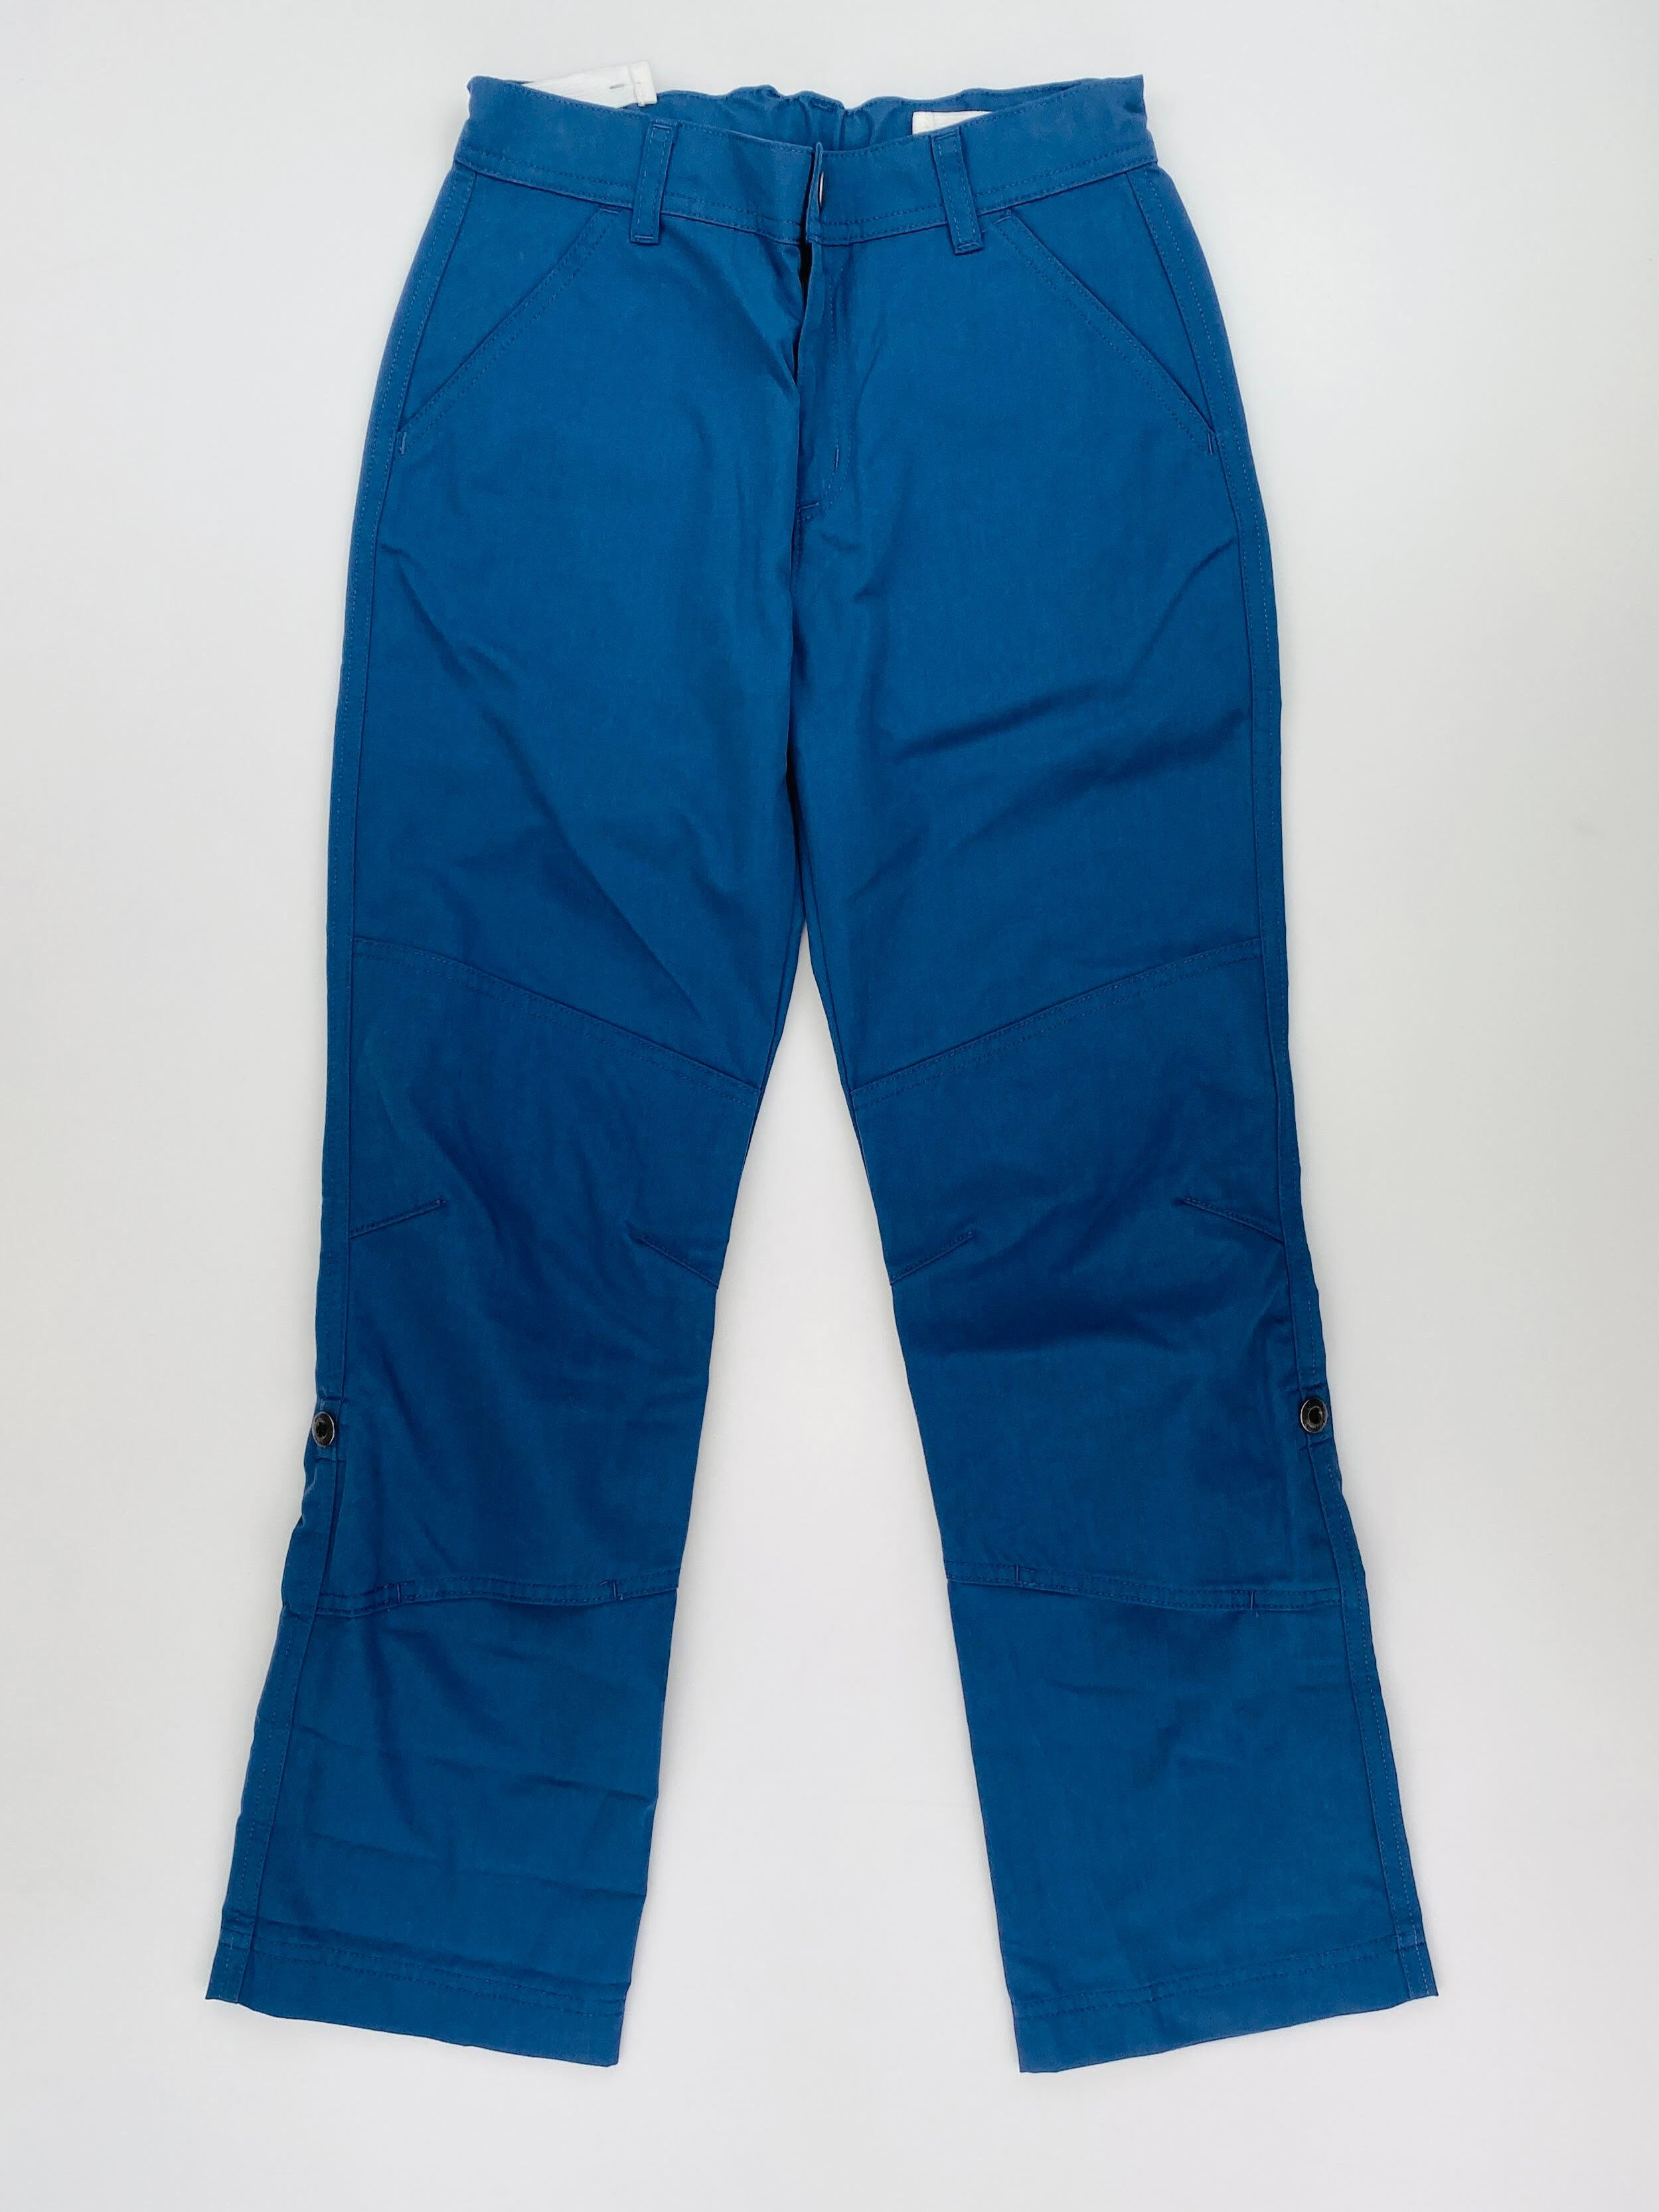 Patagonia Girls' Durable Hike Pants - Seconde main Pantalon enfant - Bleu - M | Hardloop